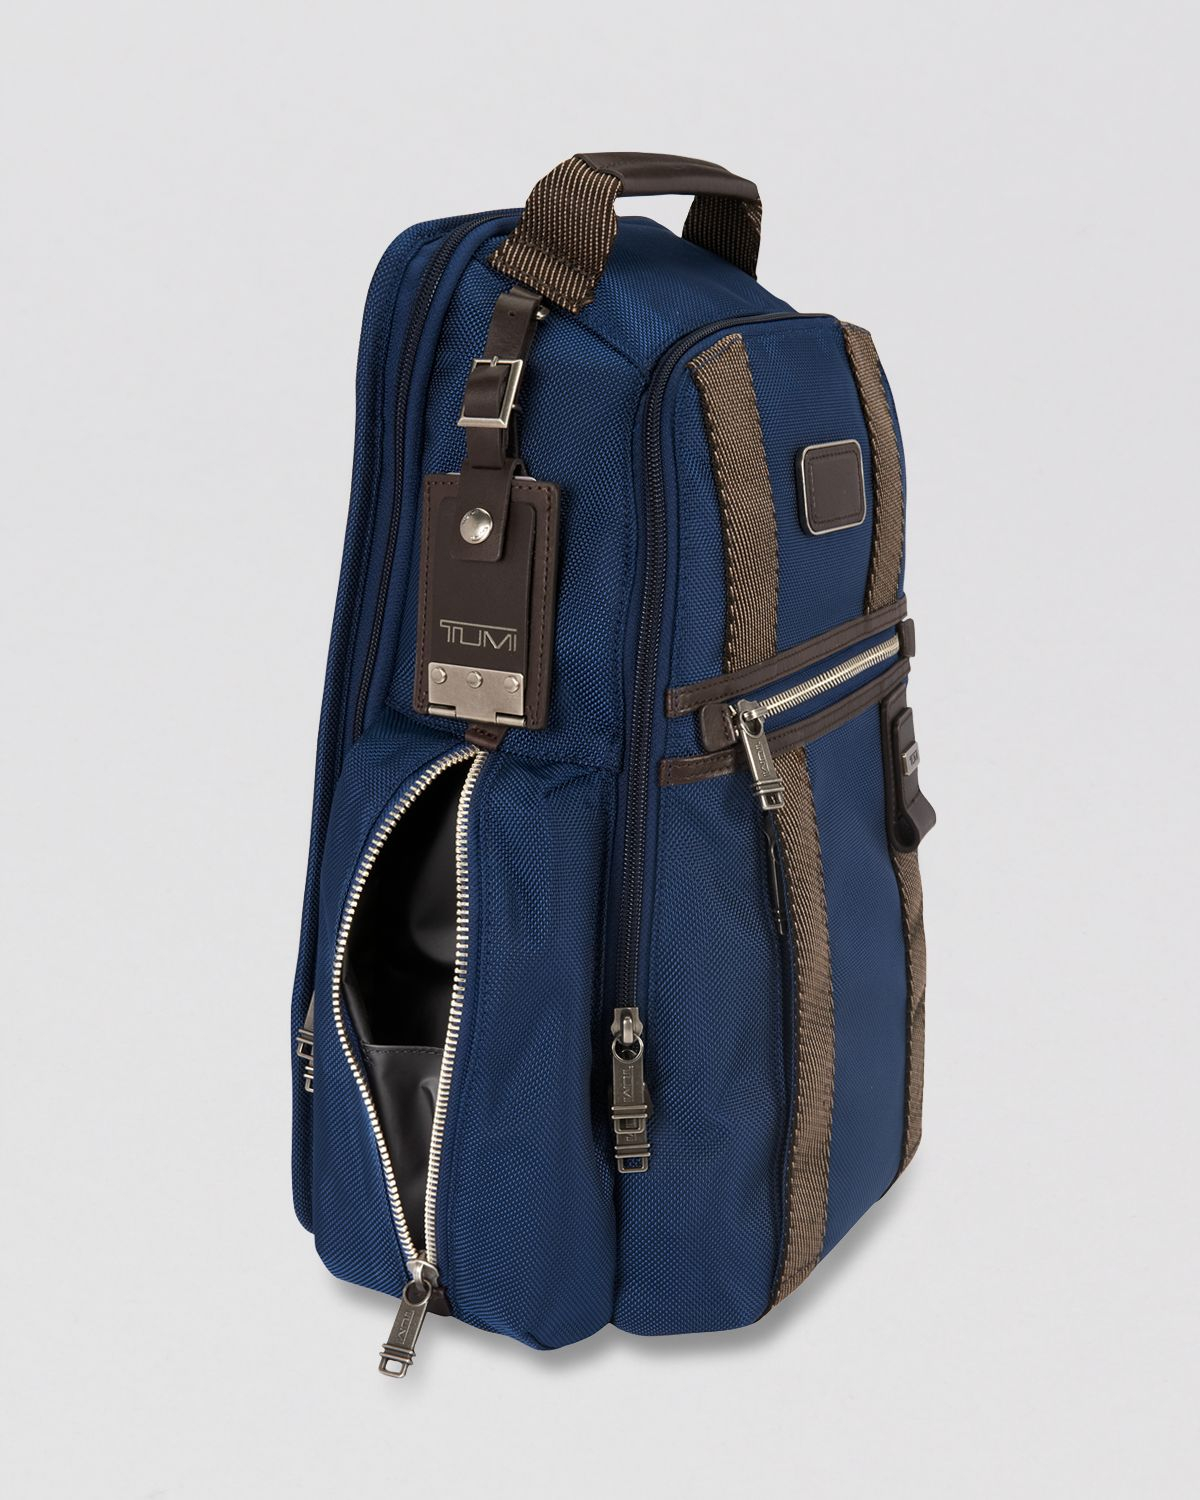 Lyst - Tumi Greely Sling Backpack in Blue for Men